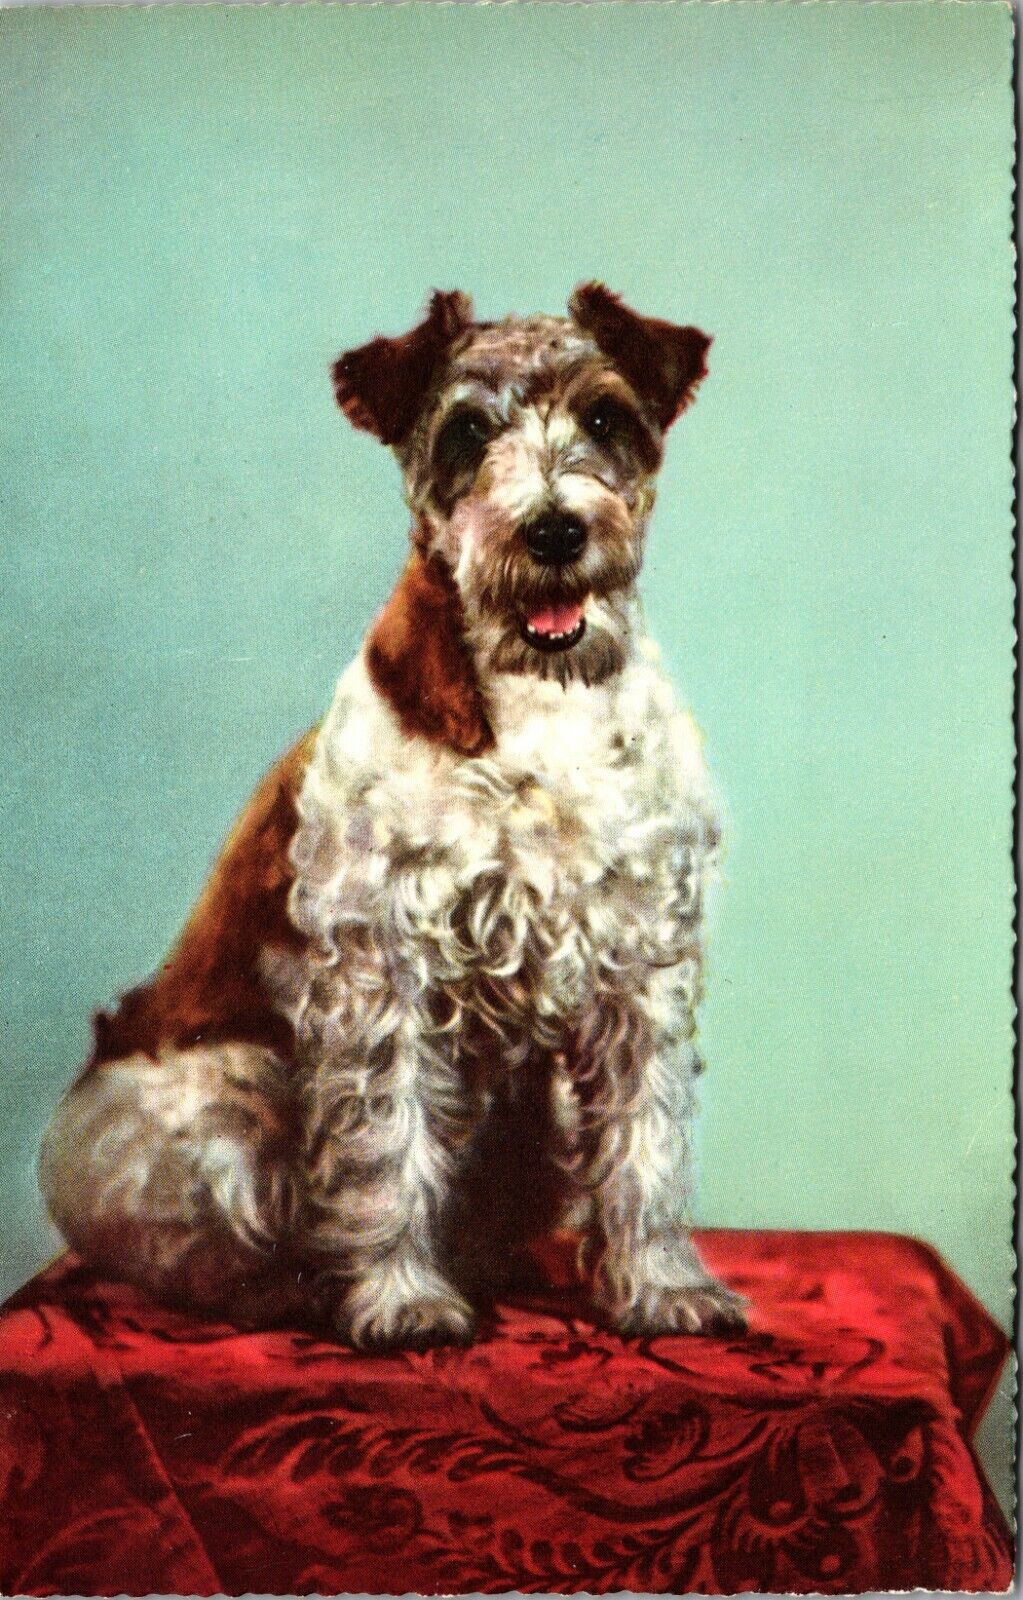 WIRED-HAIR TERRIER : PORTRAIT OF A HANDSOME DOG : POSTCARD PORTRAIT